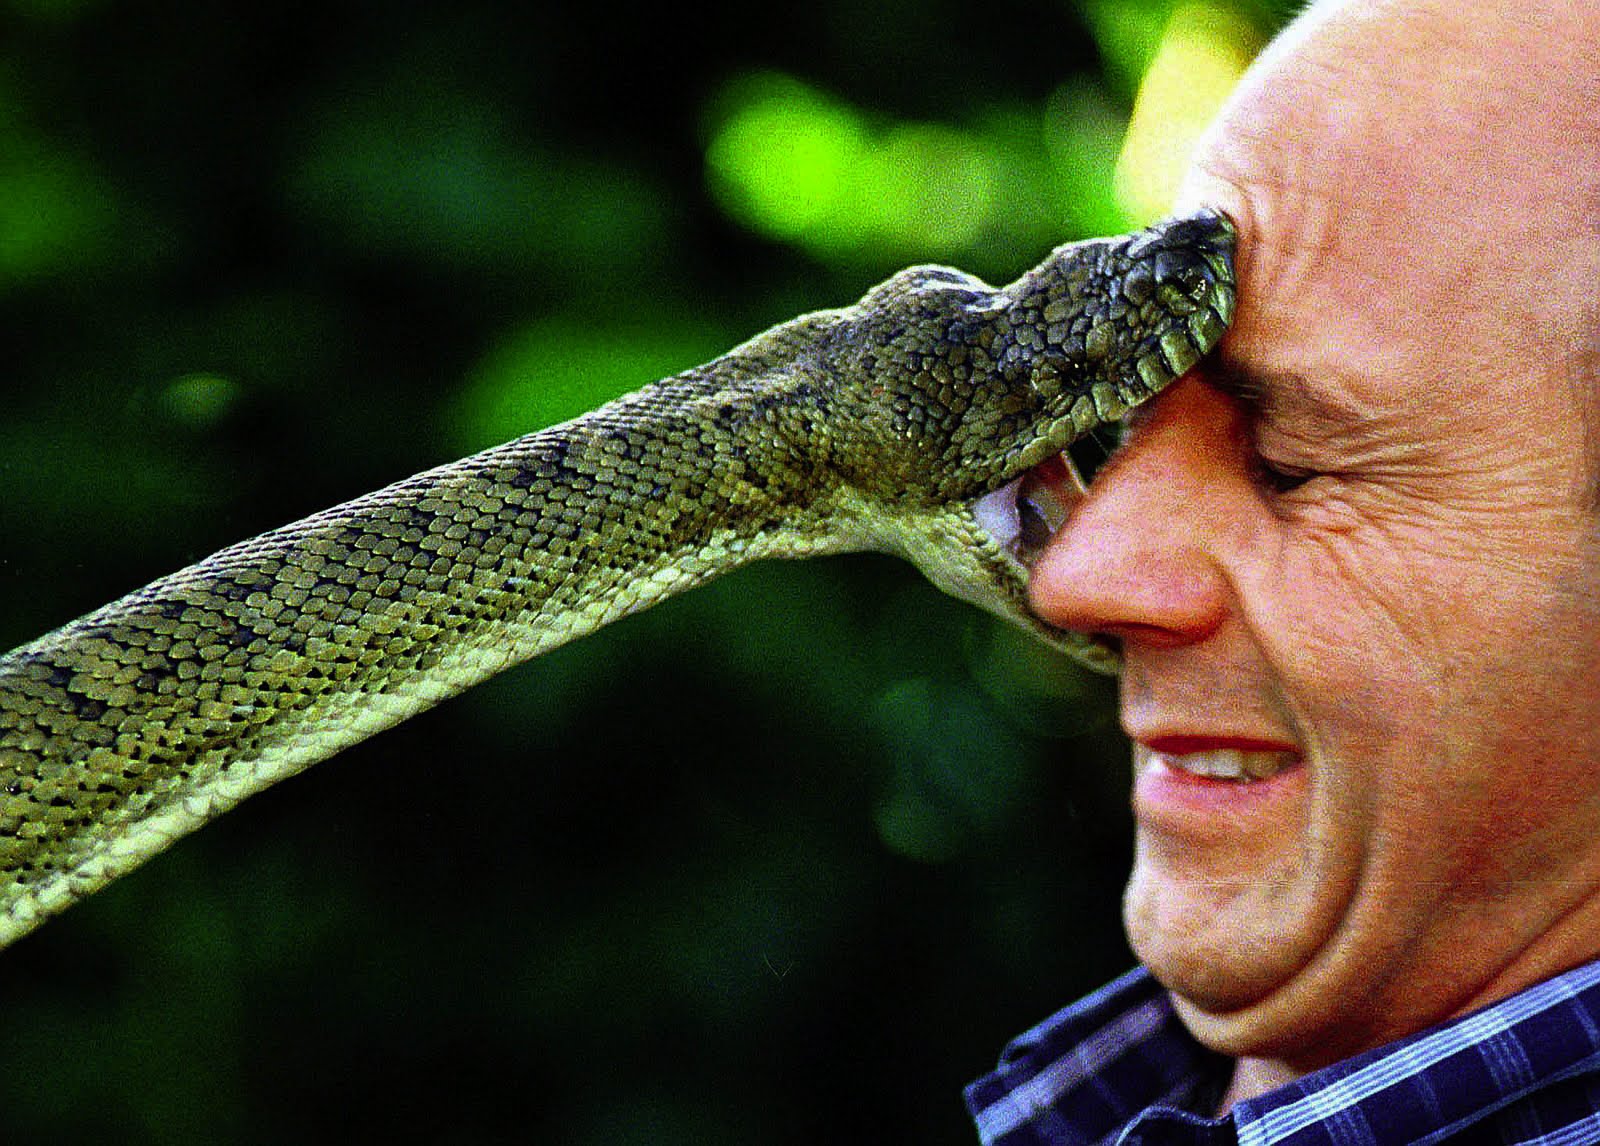 Snake Bites face of man